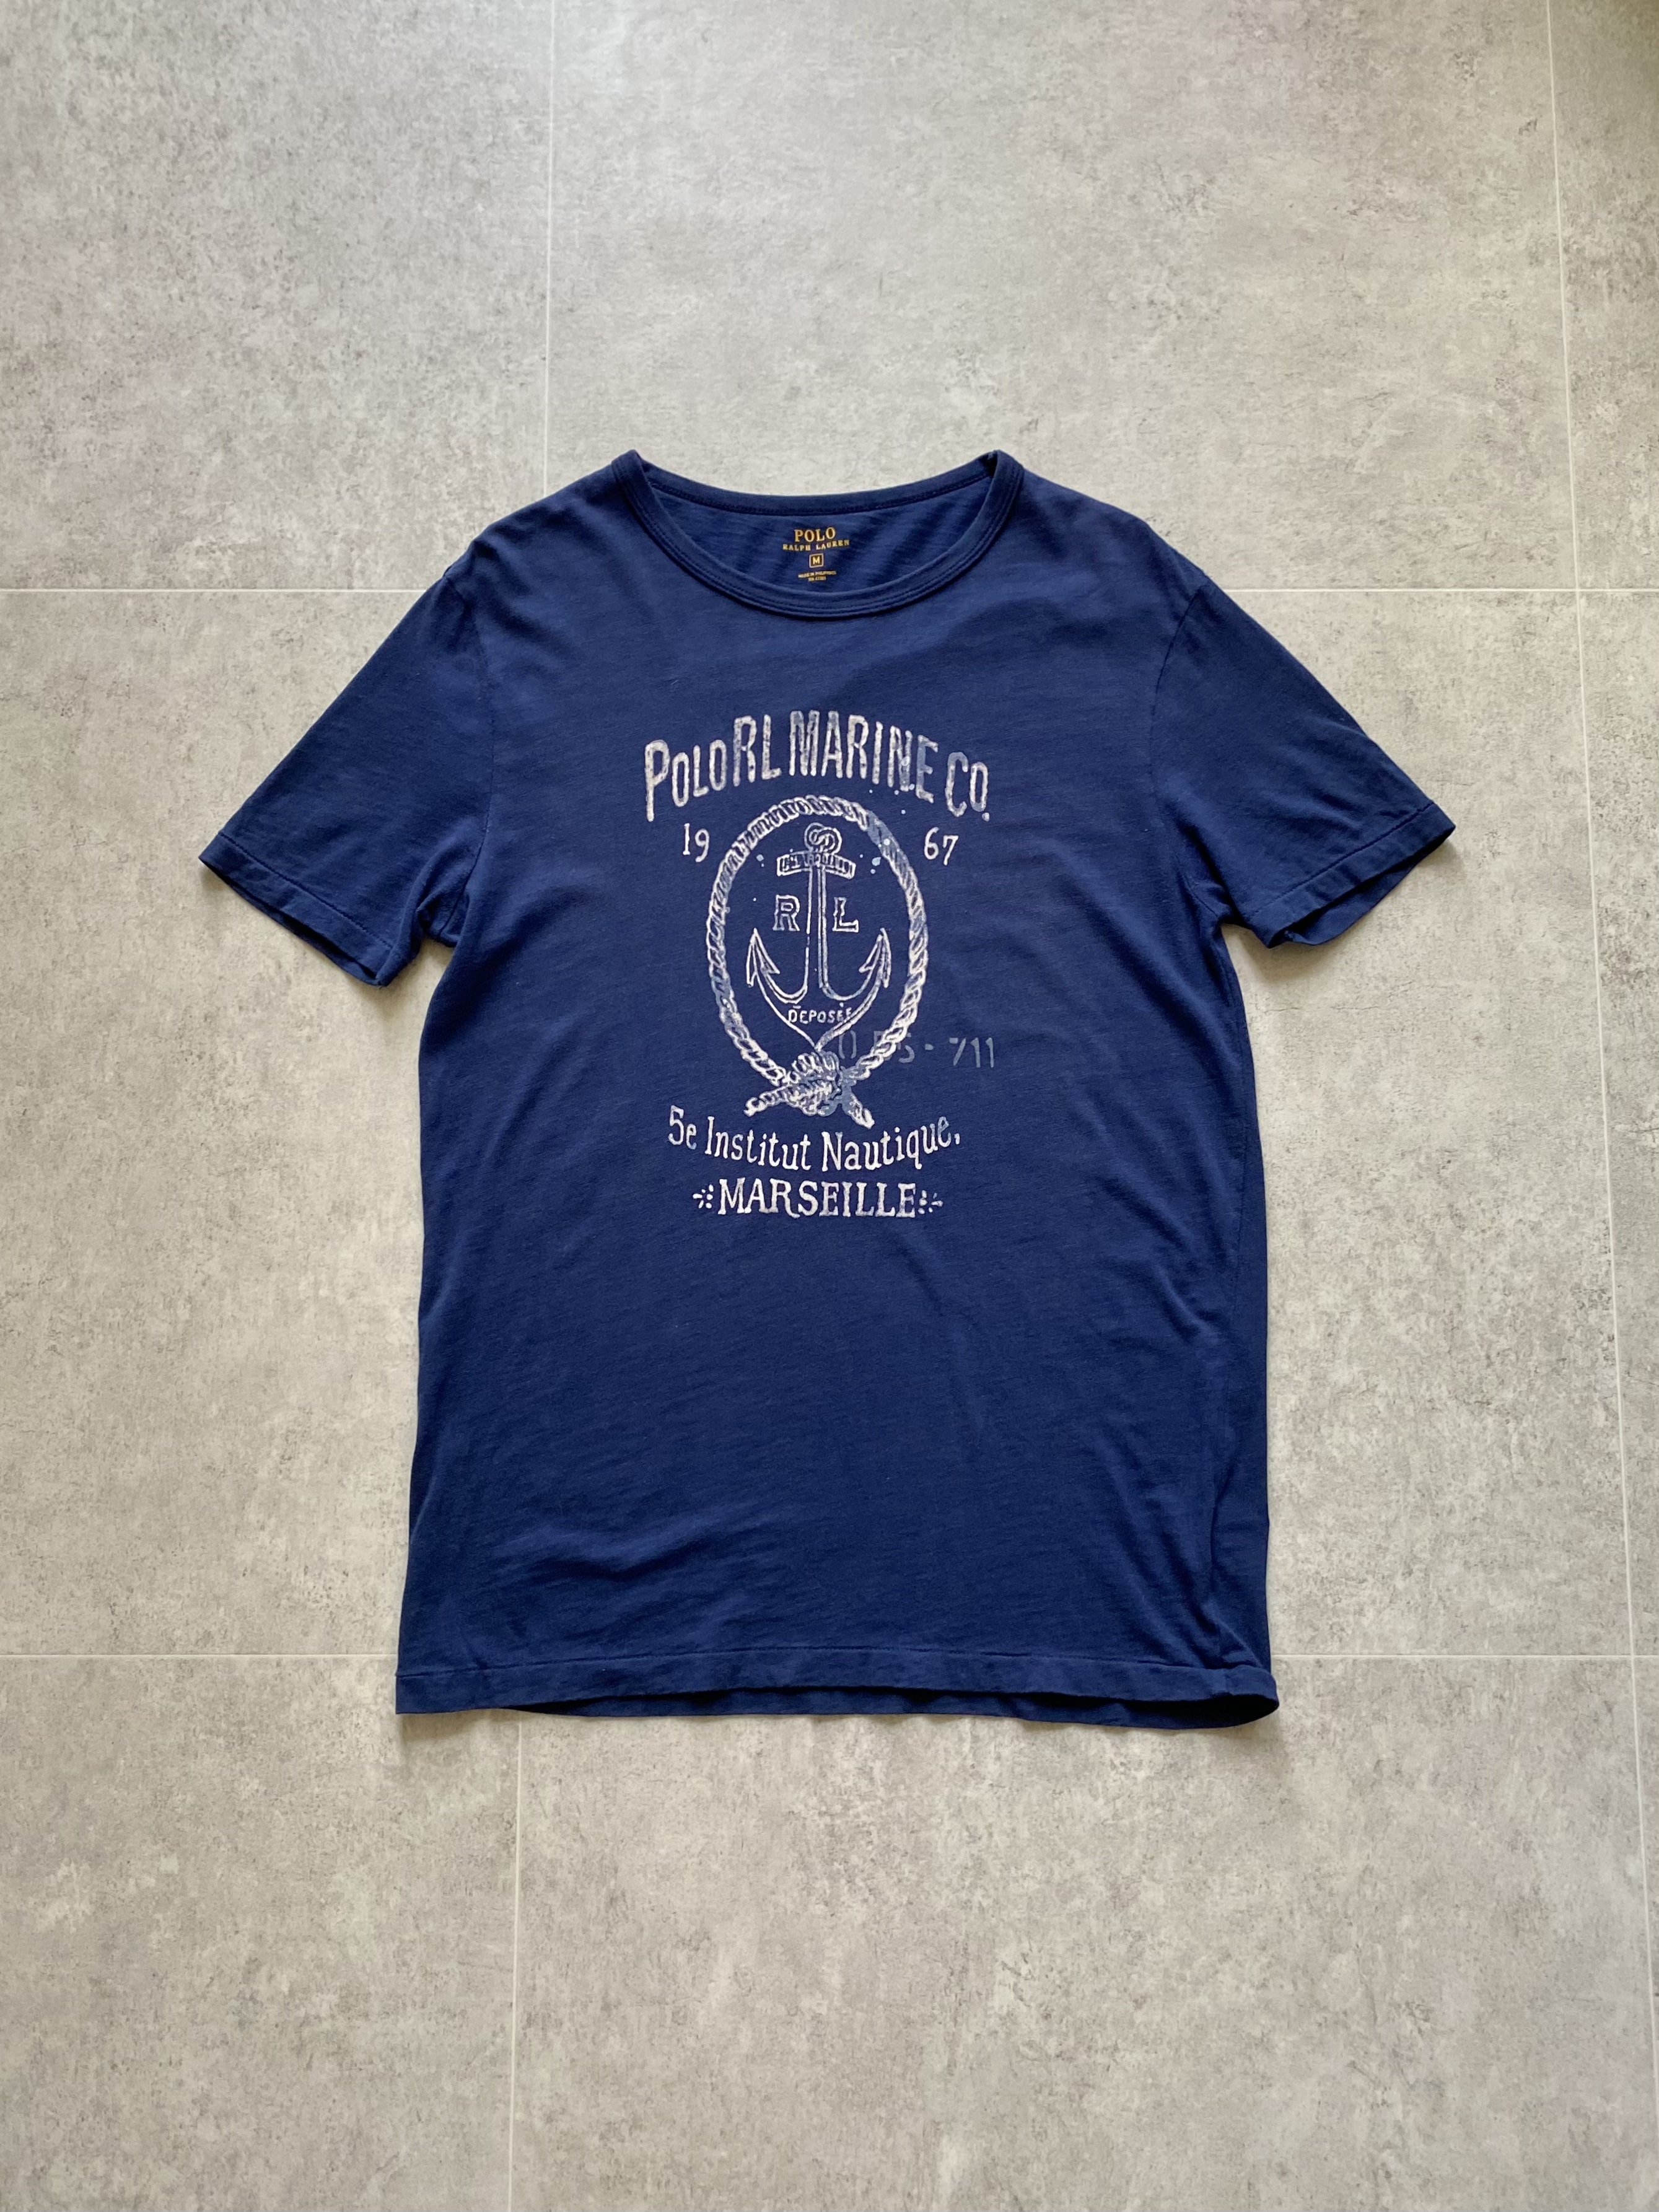 Polo Ralph Lauren Marine Co. Single Stitch T-Shirt M(~100) - 체리피커